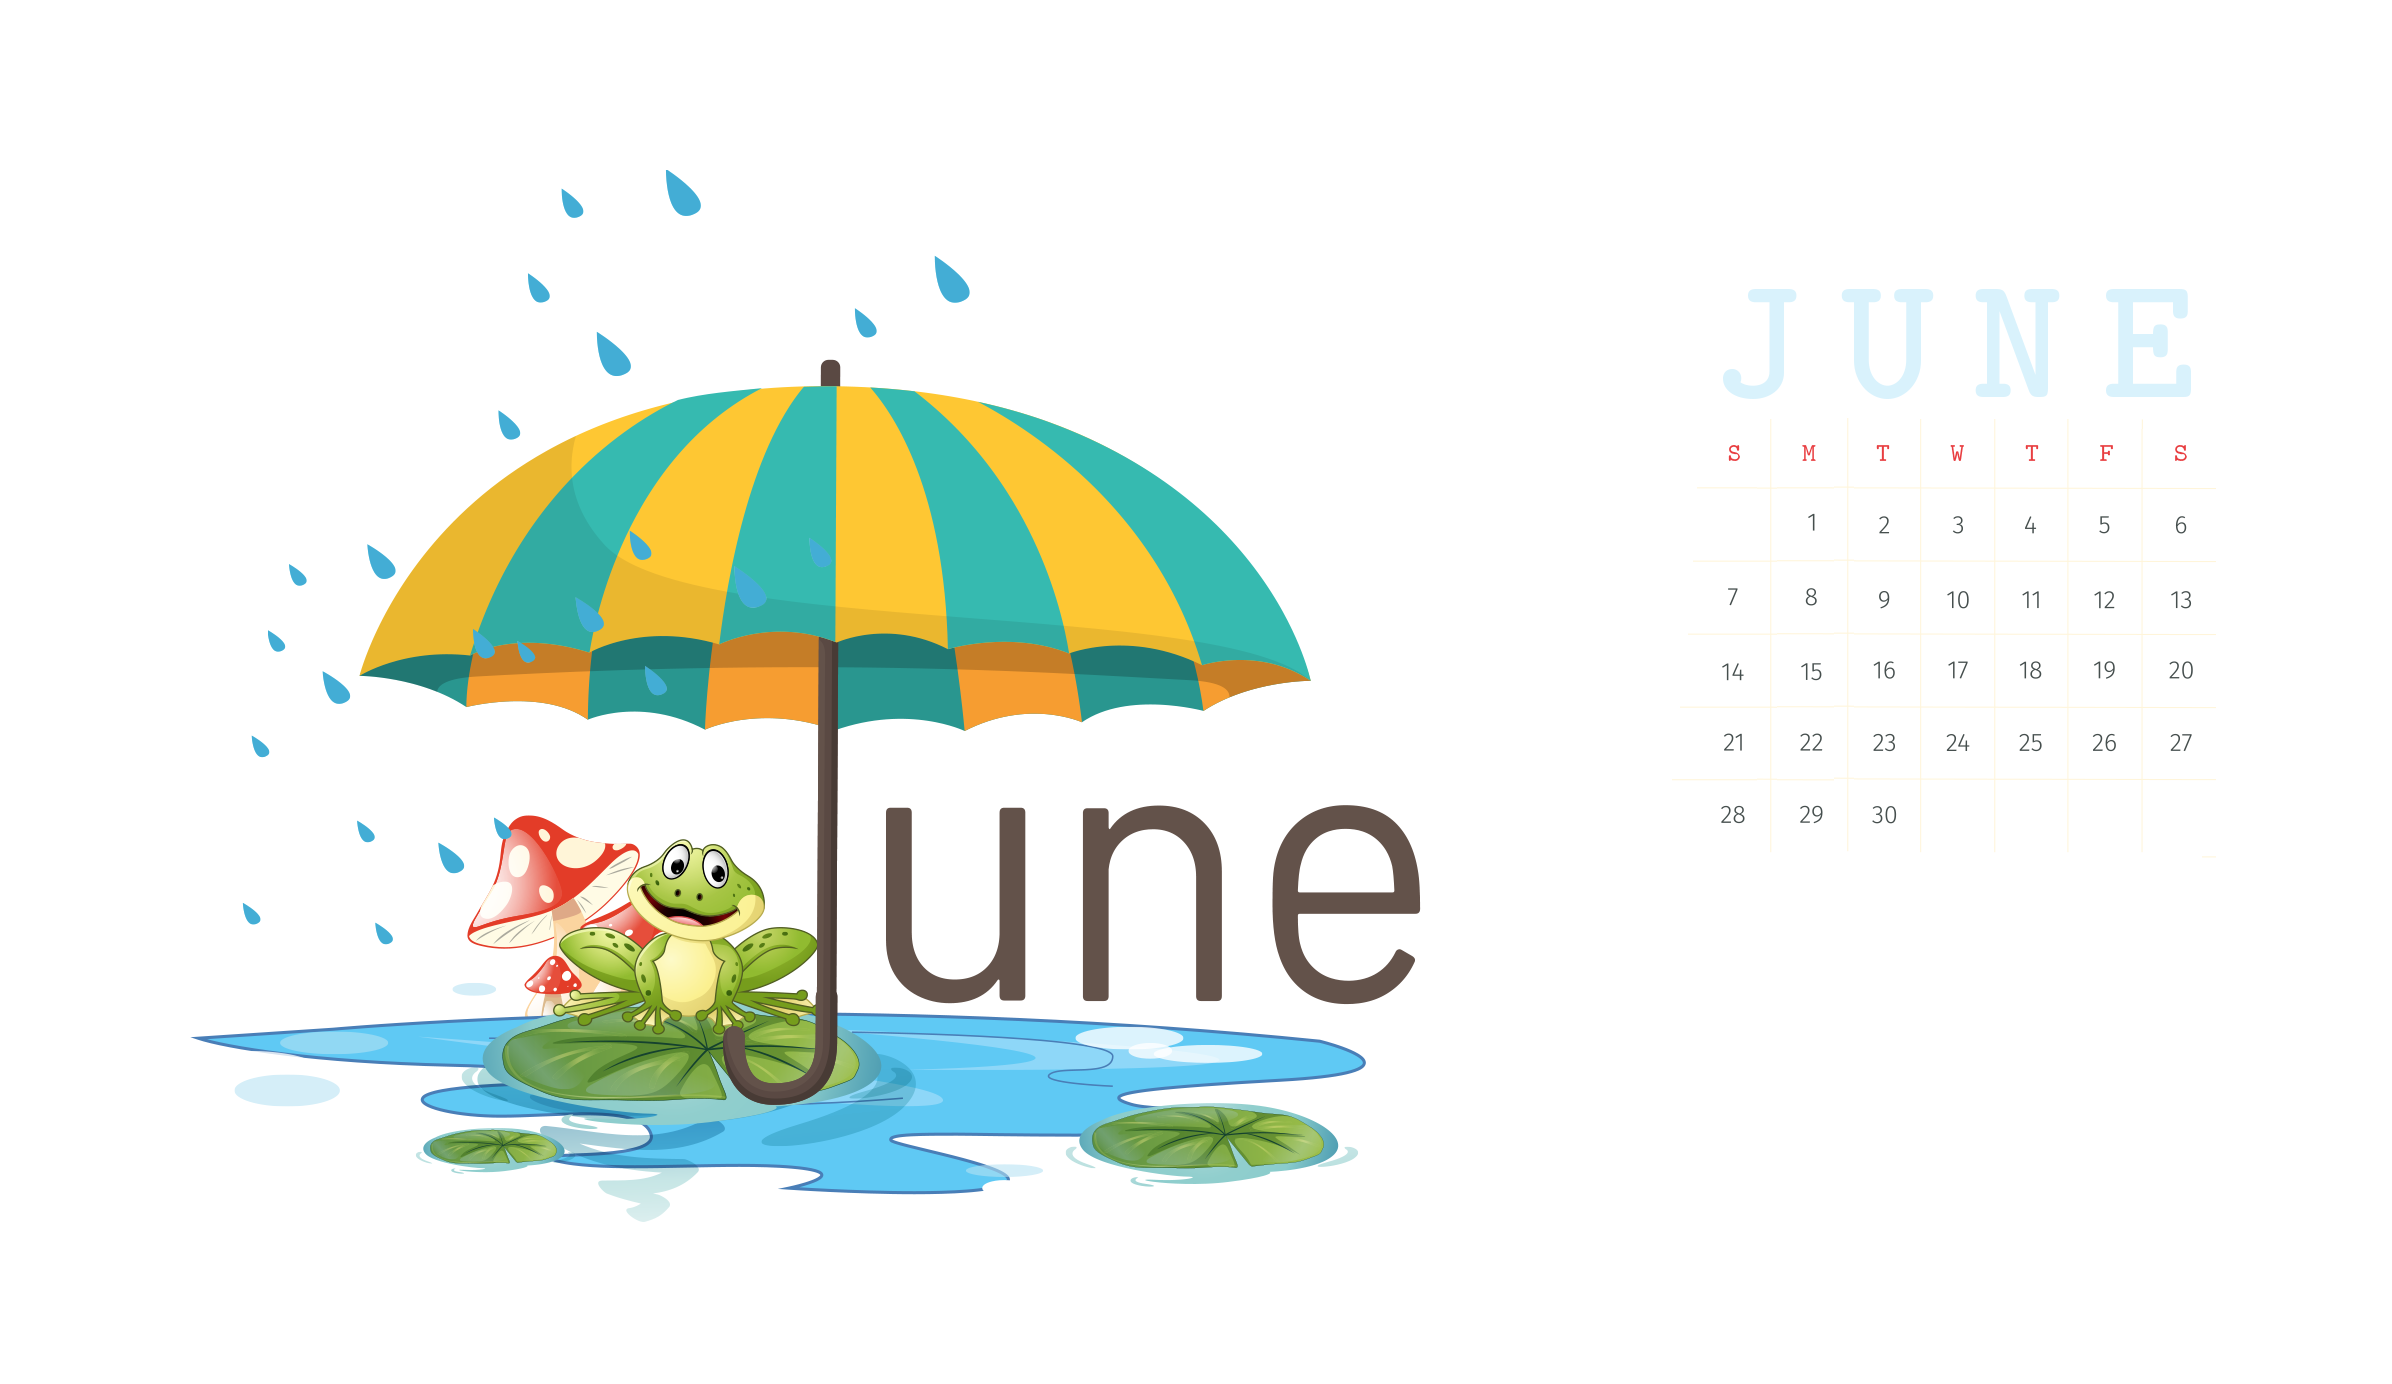 June 2020 Wallpaper Calendar